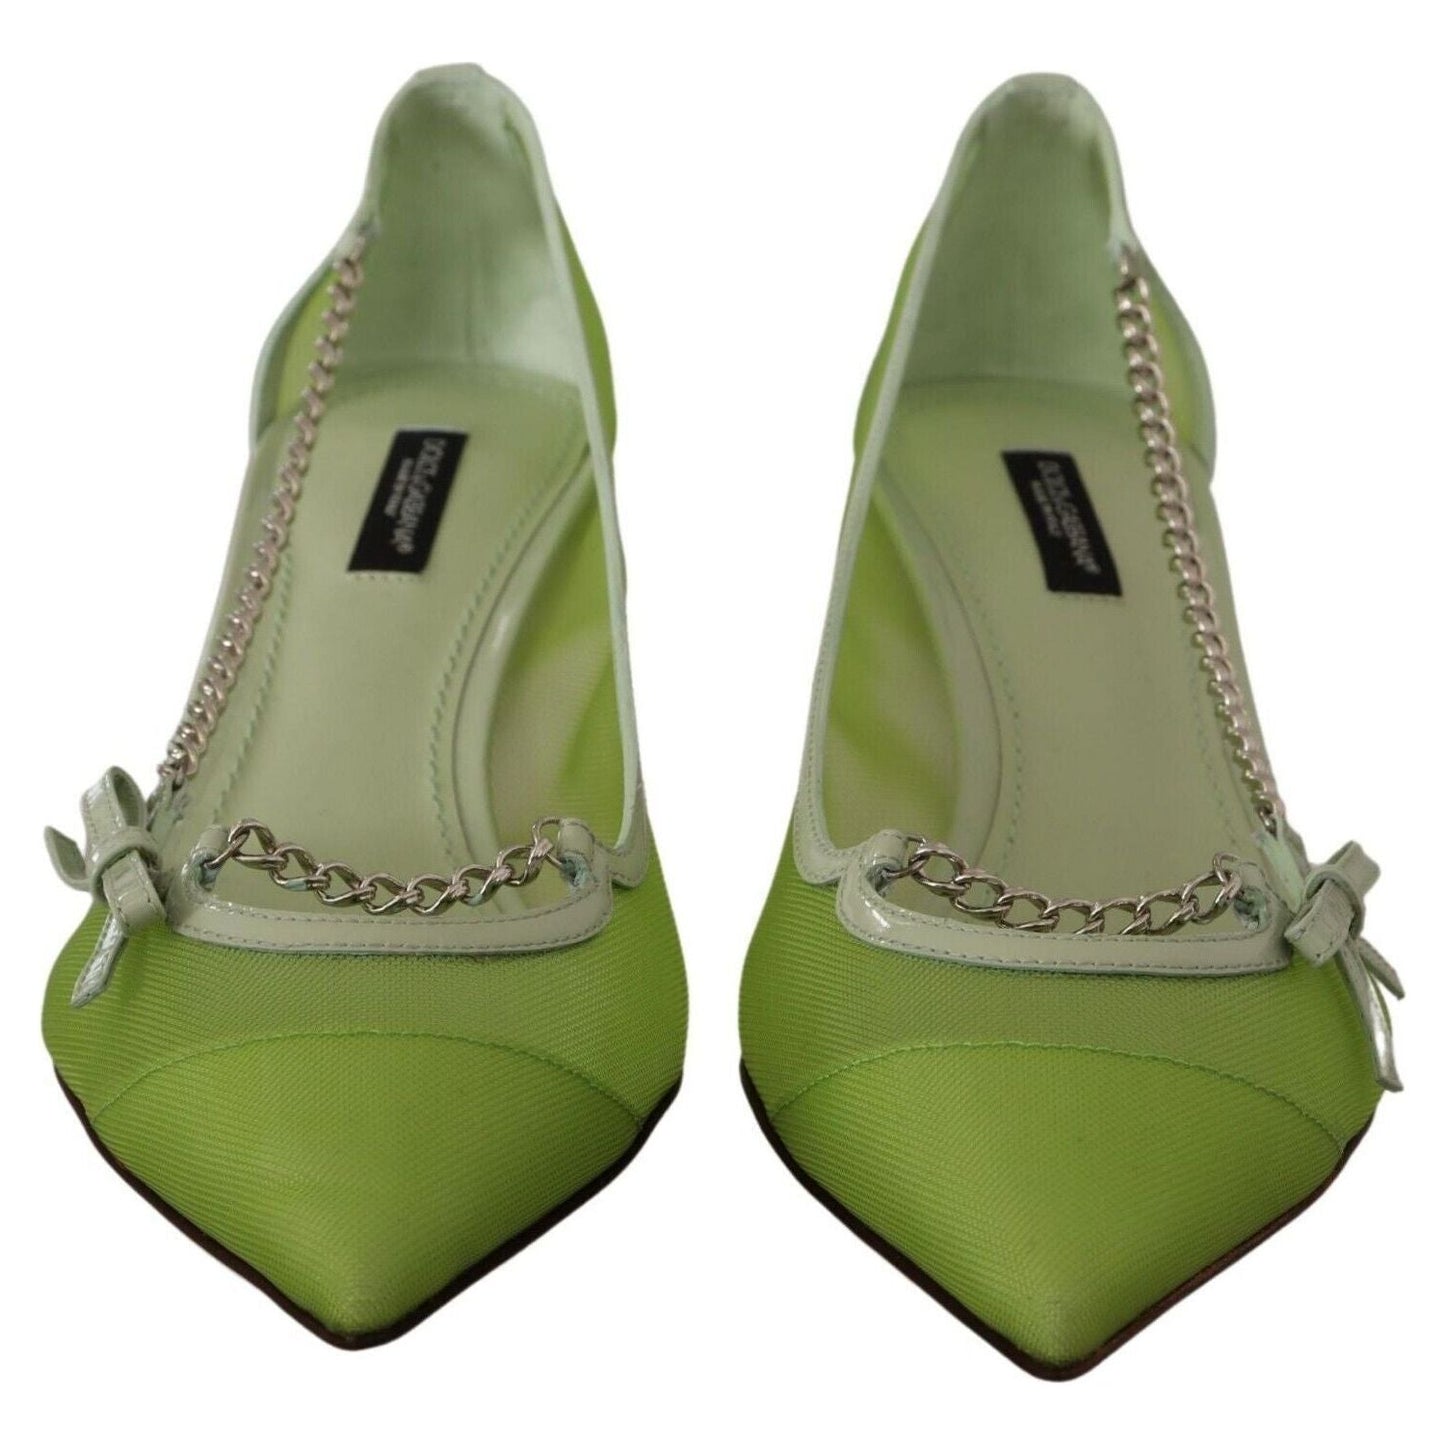 Dolce & Gabbana Enchanting Green Mesh Chain Pumps green-mesh-leather-chains-heels-pumps-shoes s-l1600-2-152-5d54ce7e-061.jpg